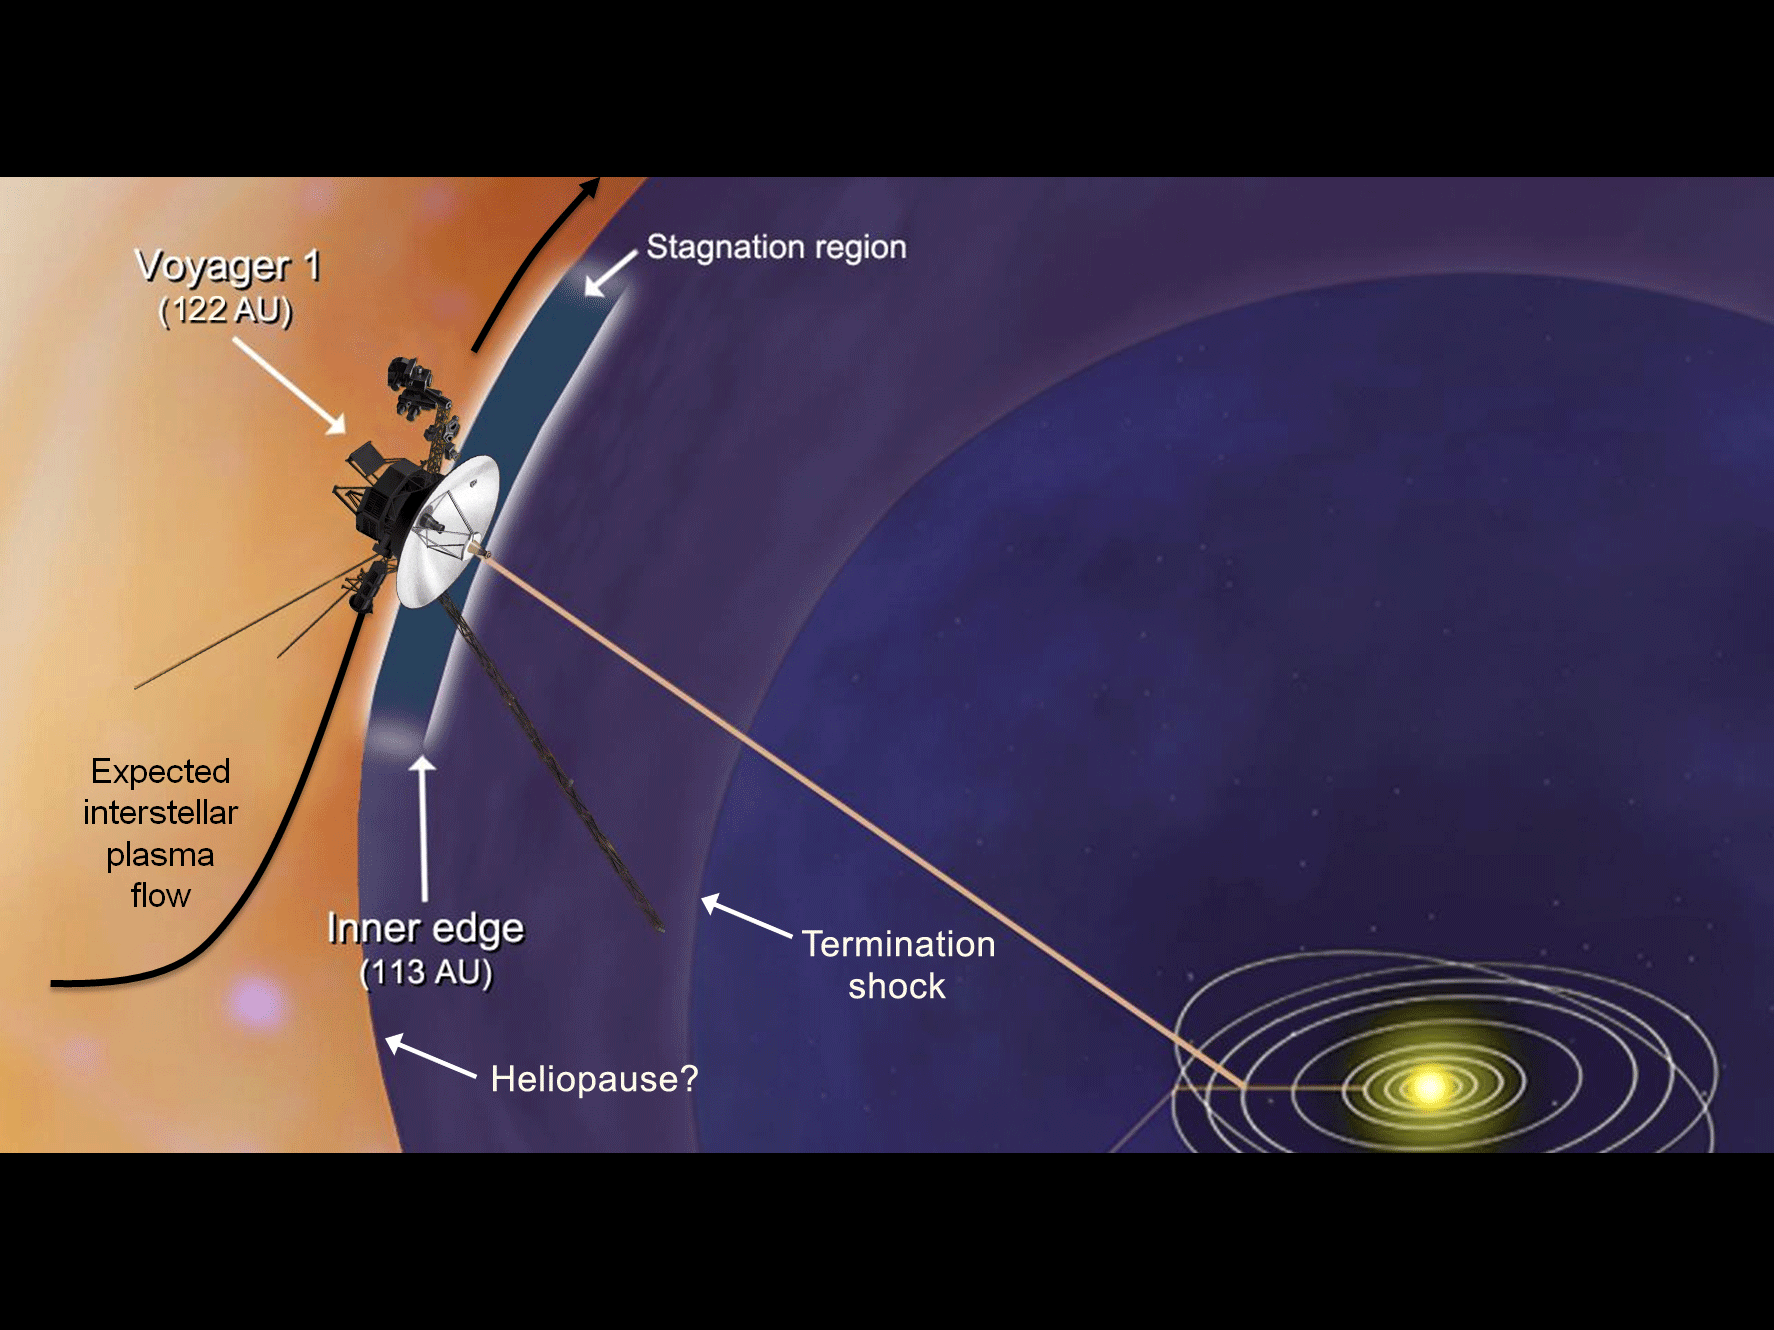 This artist's concept shows plasma flows around NASA's Voyager 1 spacecraft as it gets close to entering interstellar space